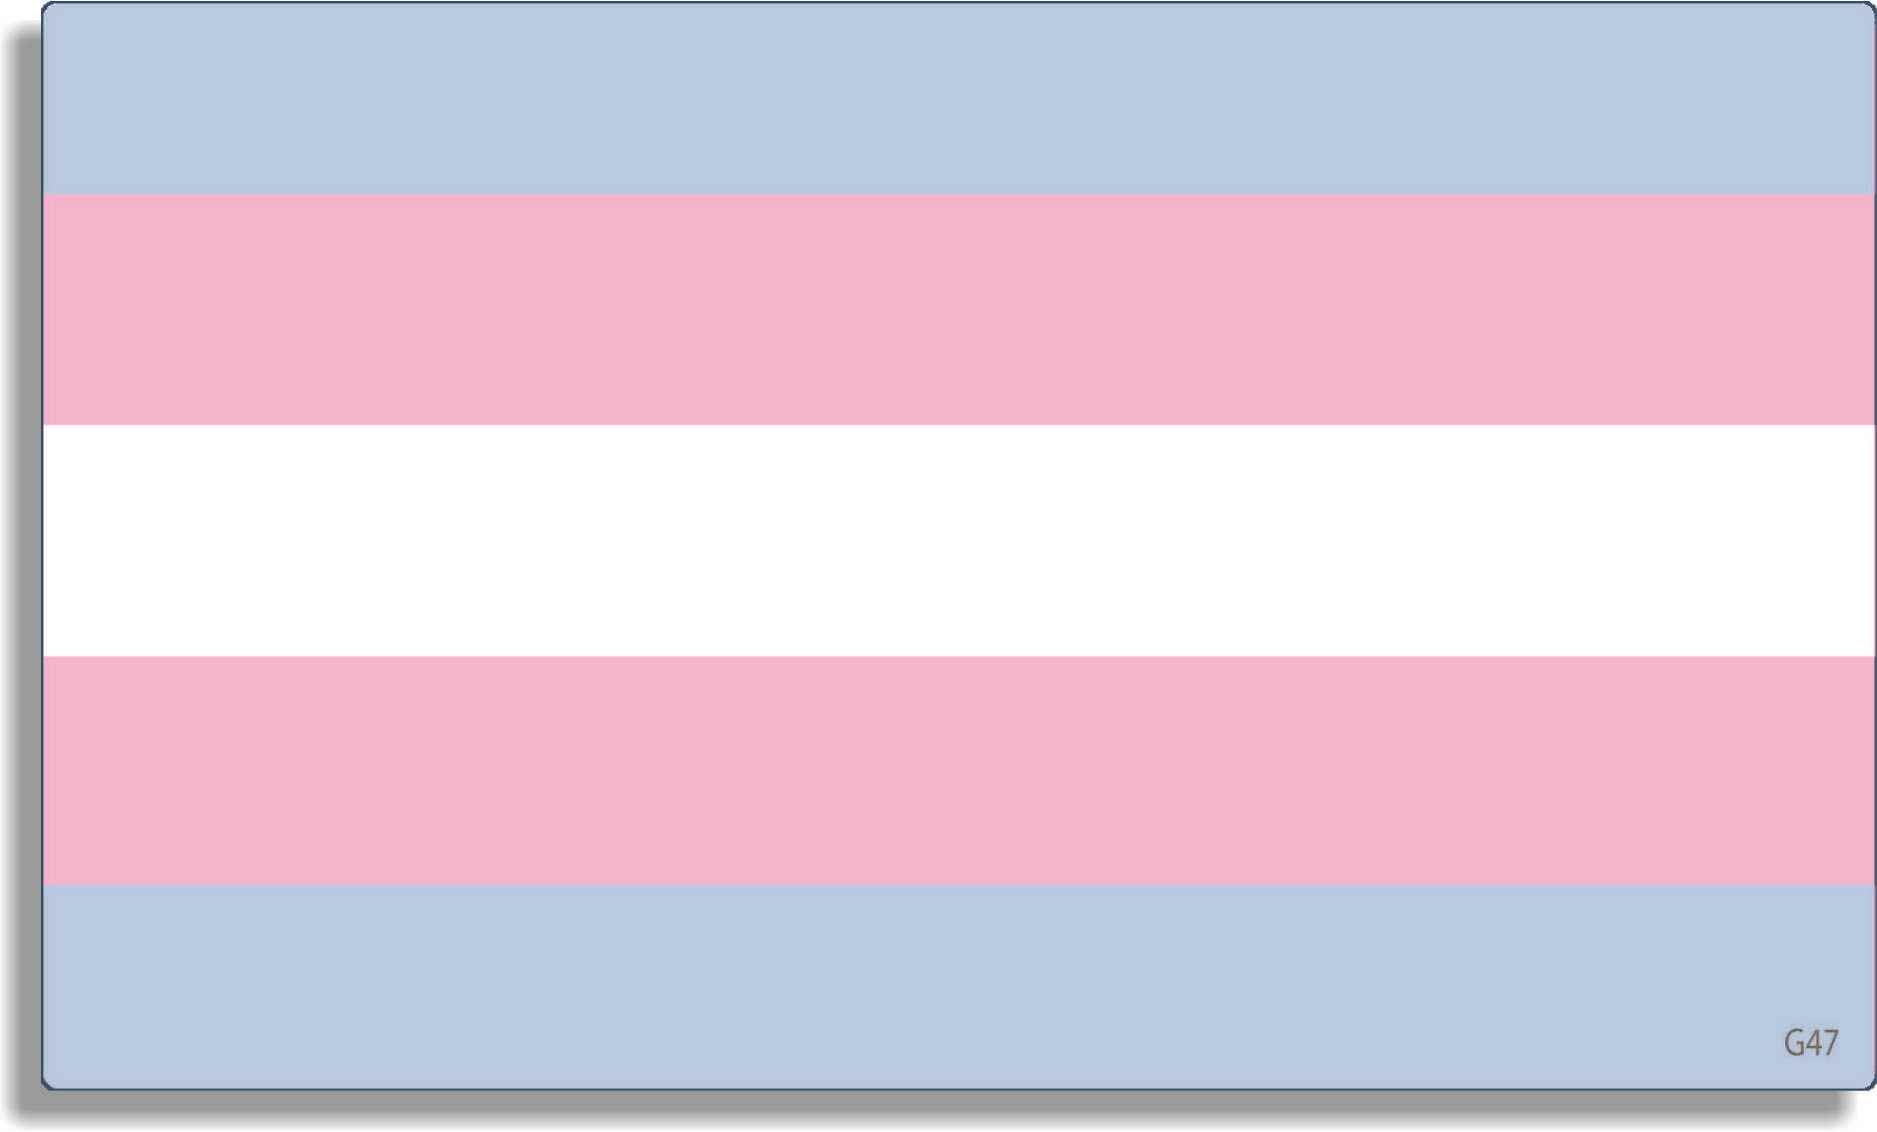 Transgender pride flag - 3" x 5" Bumper Sticker--Car Magnet- -  Decal Bumper Sticker-LGBT Bumper Sticker Car Magnet Transgender pride flag-  Decal for carsgay, glbtq, transexual